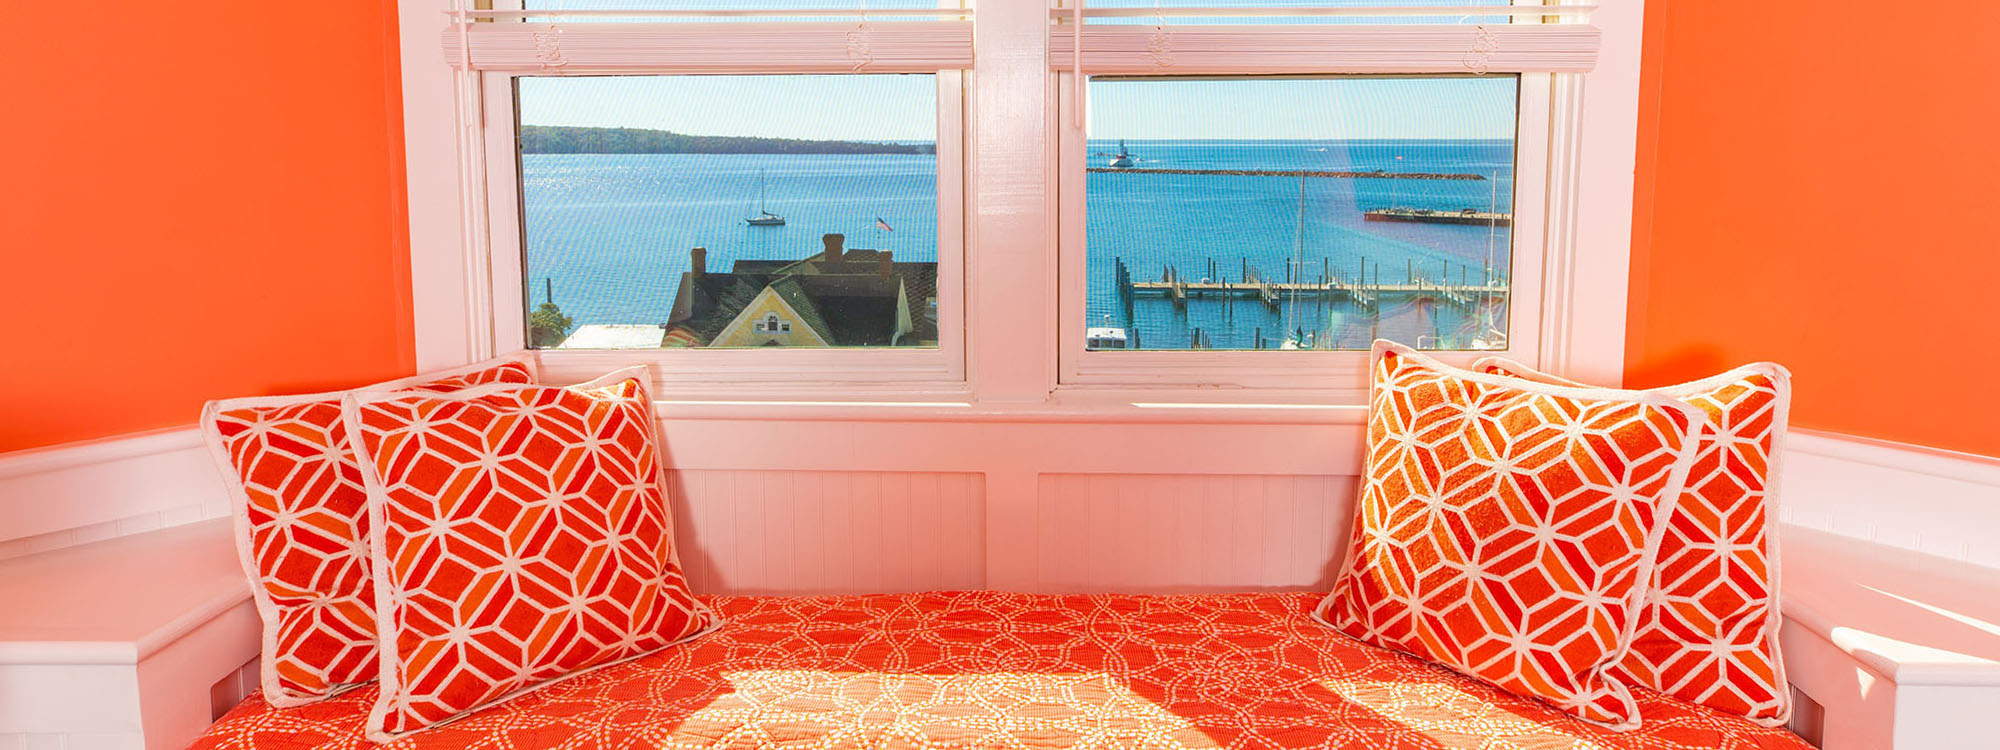 Harbor View Suite Window Seat overlooking harbor at the Island House Hotel on Mackinac Island, MI